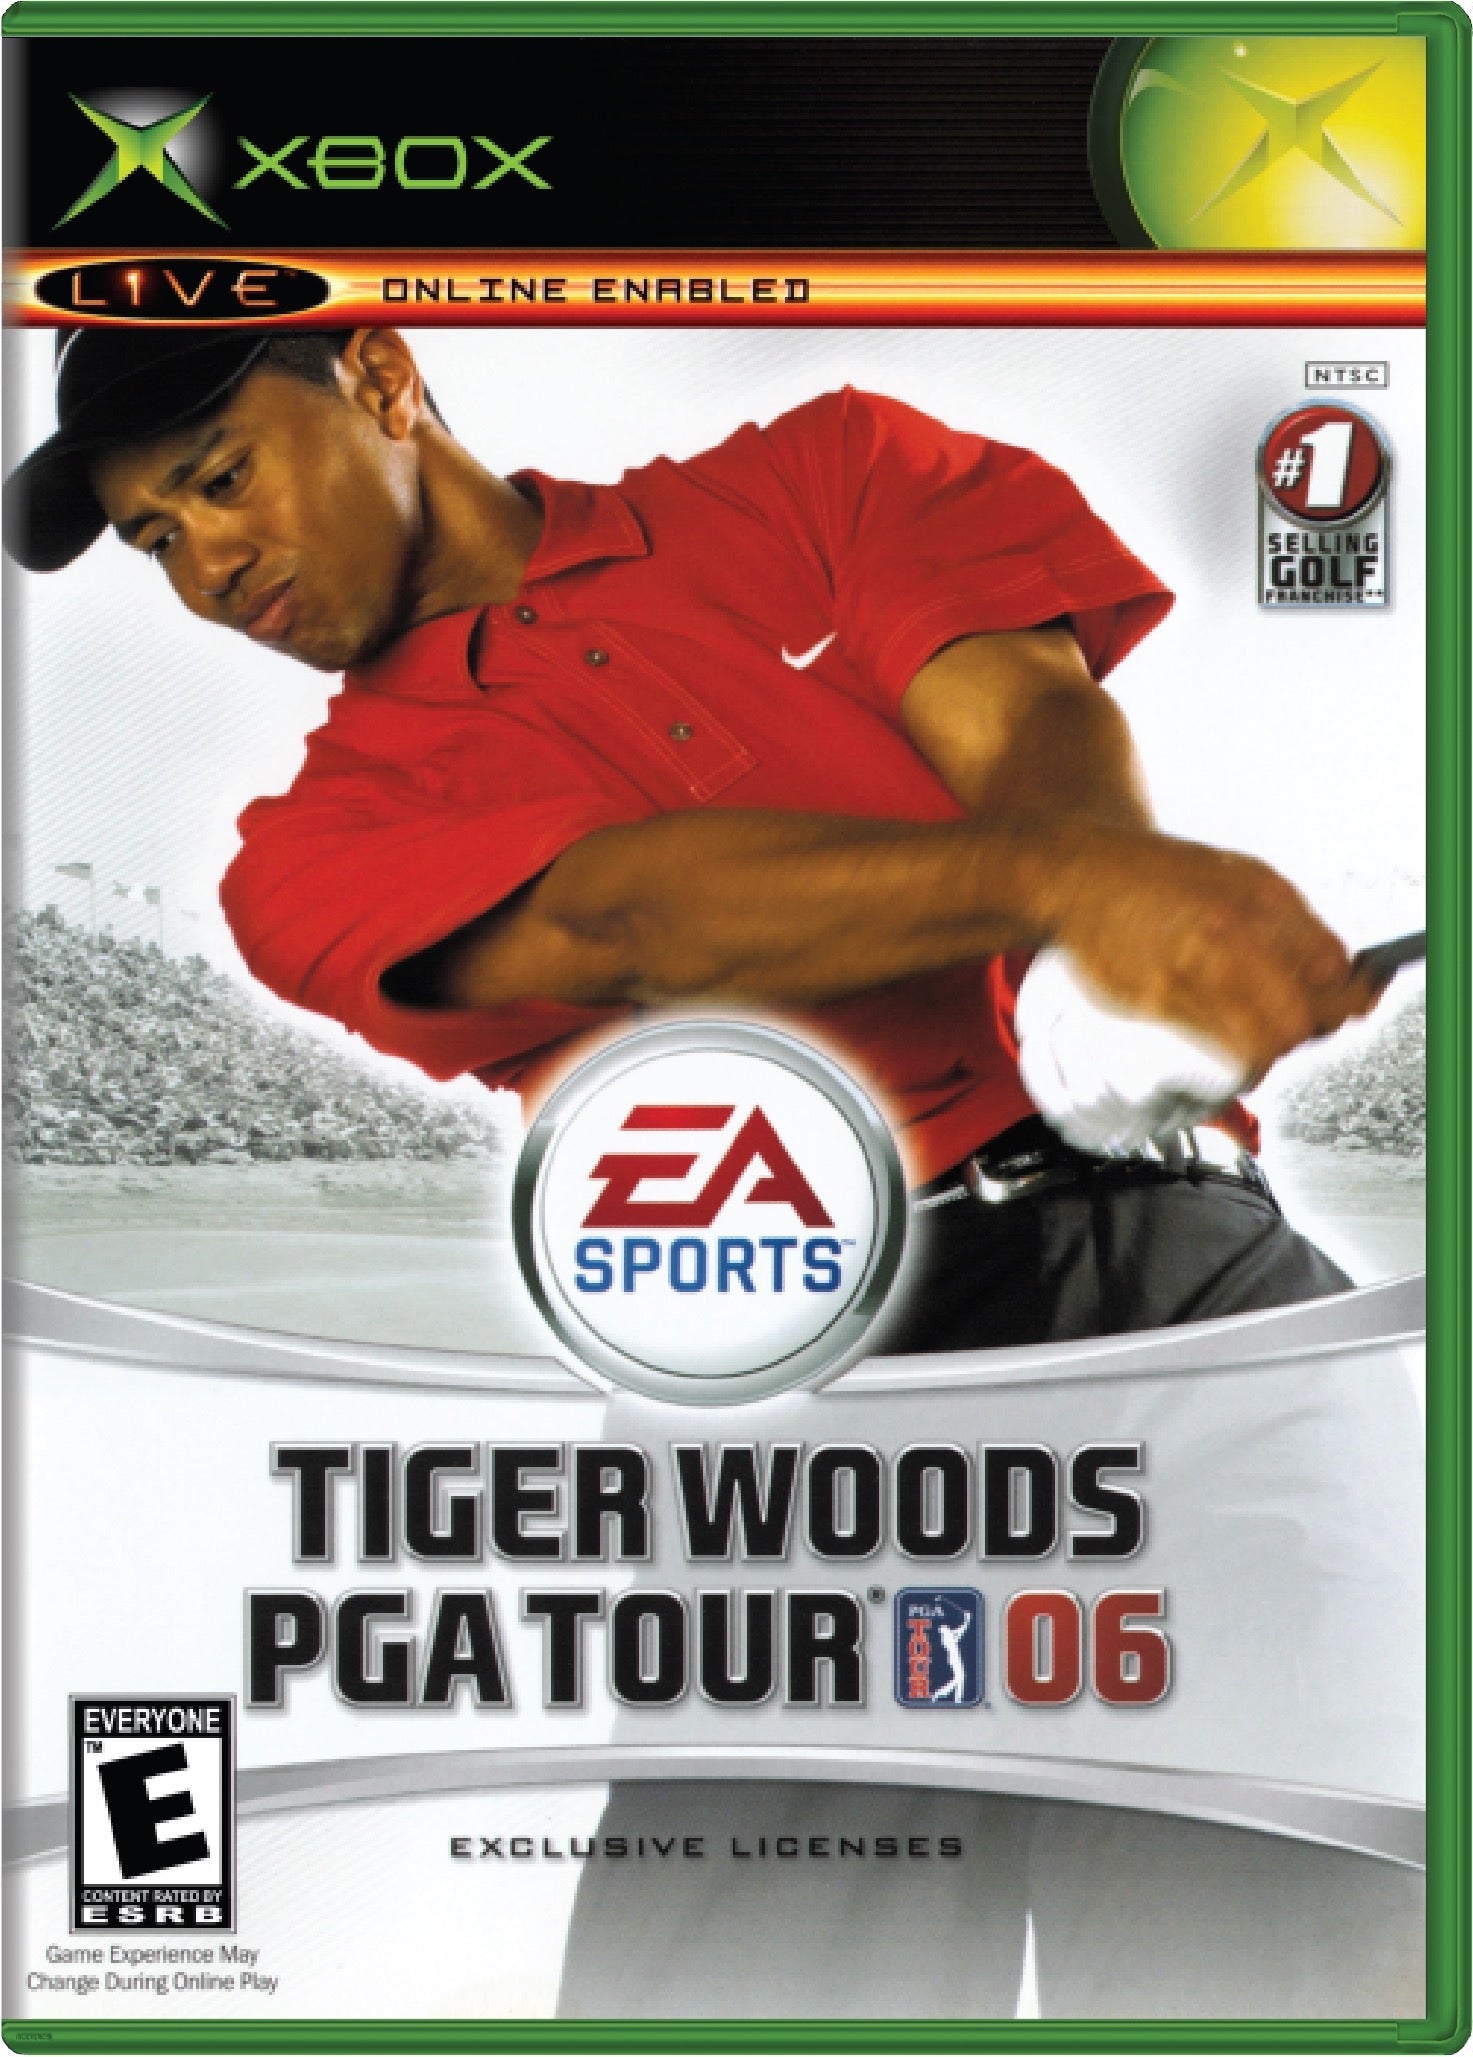 Tiger Woods PGA Tour 06 Cover Art